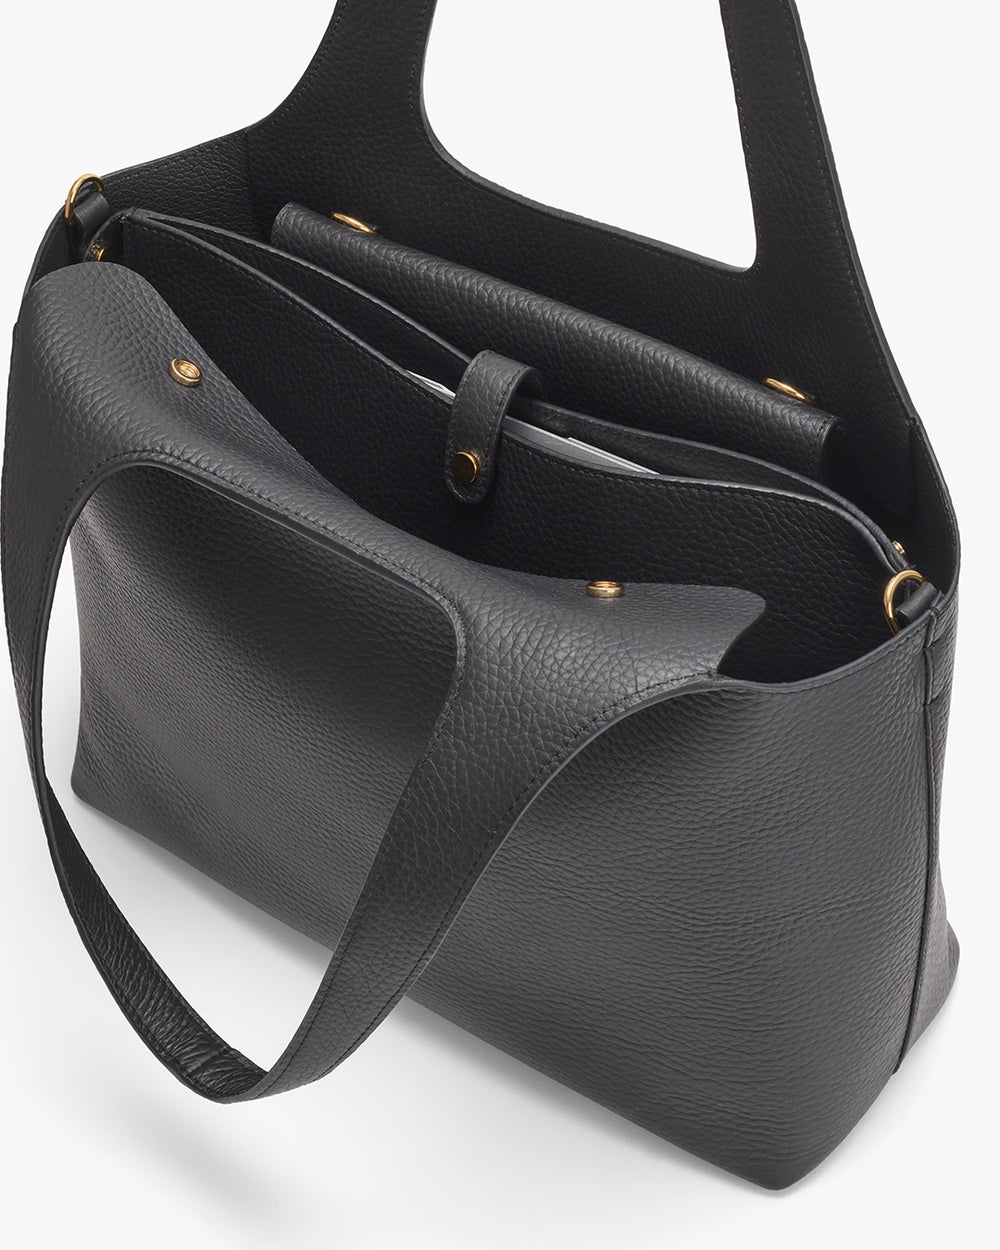 Open handbag with handles and a shoulder strap.